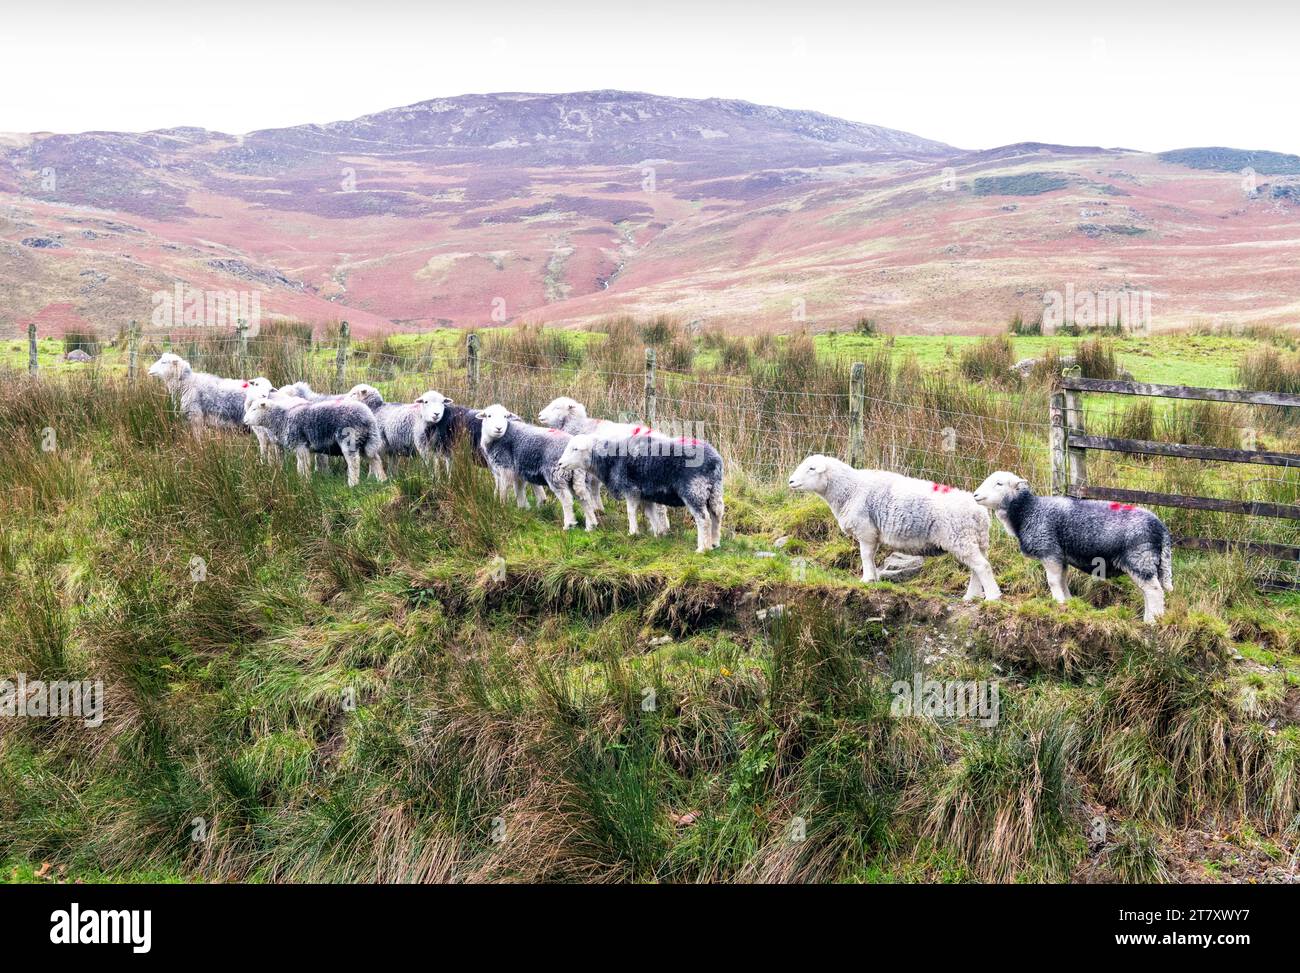 Una bandada de ovejas Herdwick, nativa del Distrito de los Lagos, cerca de Buttermere, Cumbria, Inglaterra, Reino Unido, Europa Foto de stock